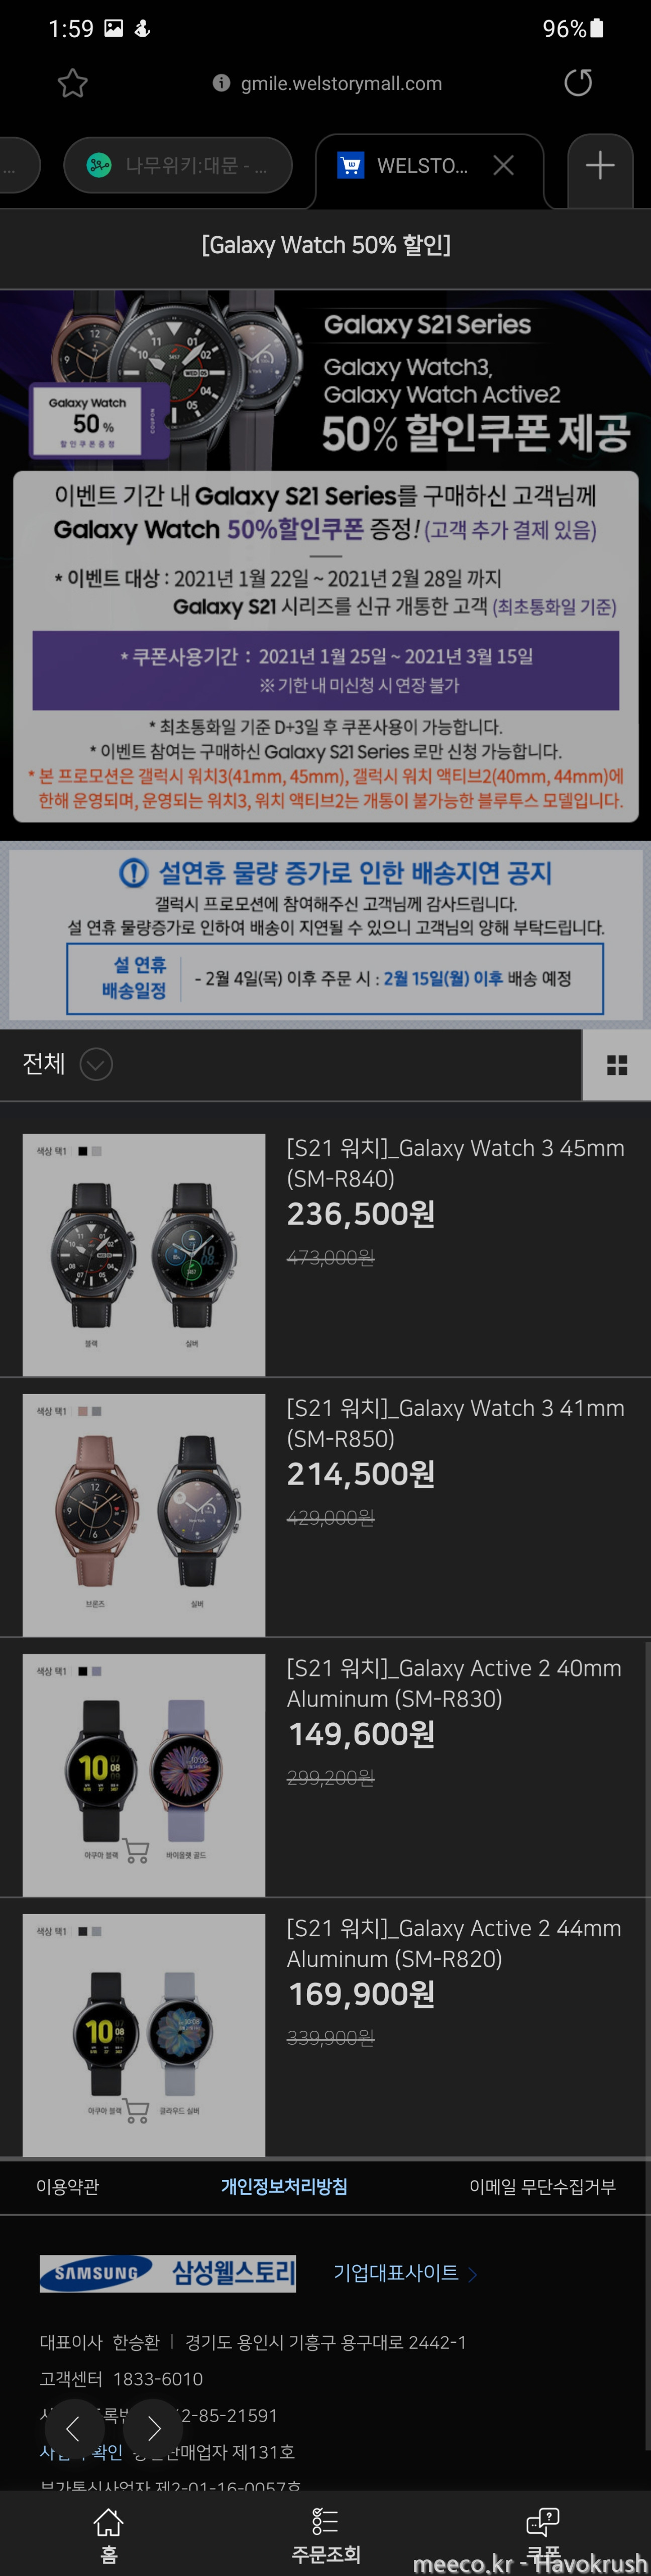 Screenshot_20210211-015922_Samsung Internet.jpg